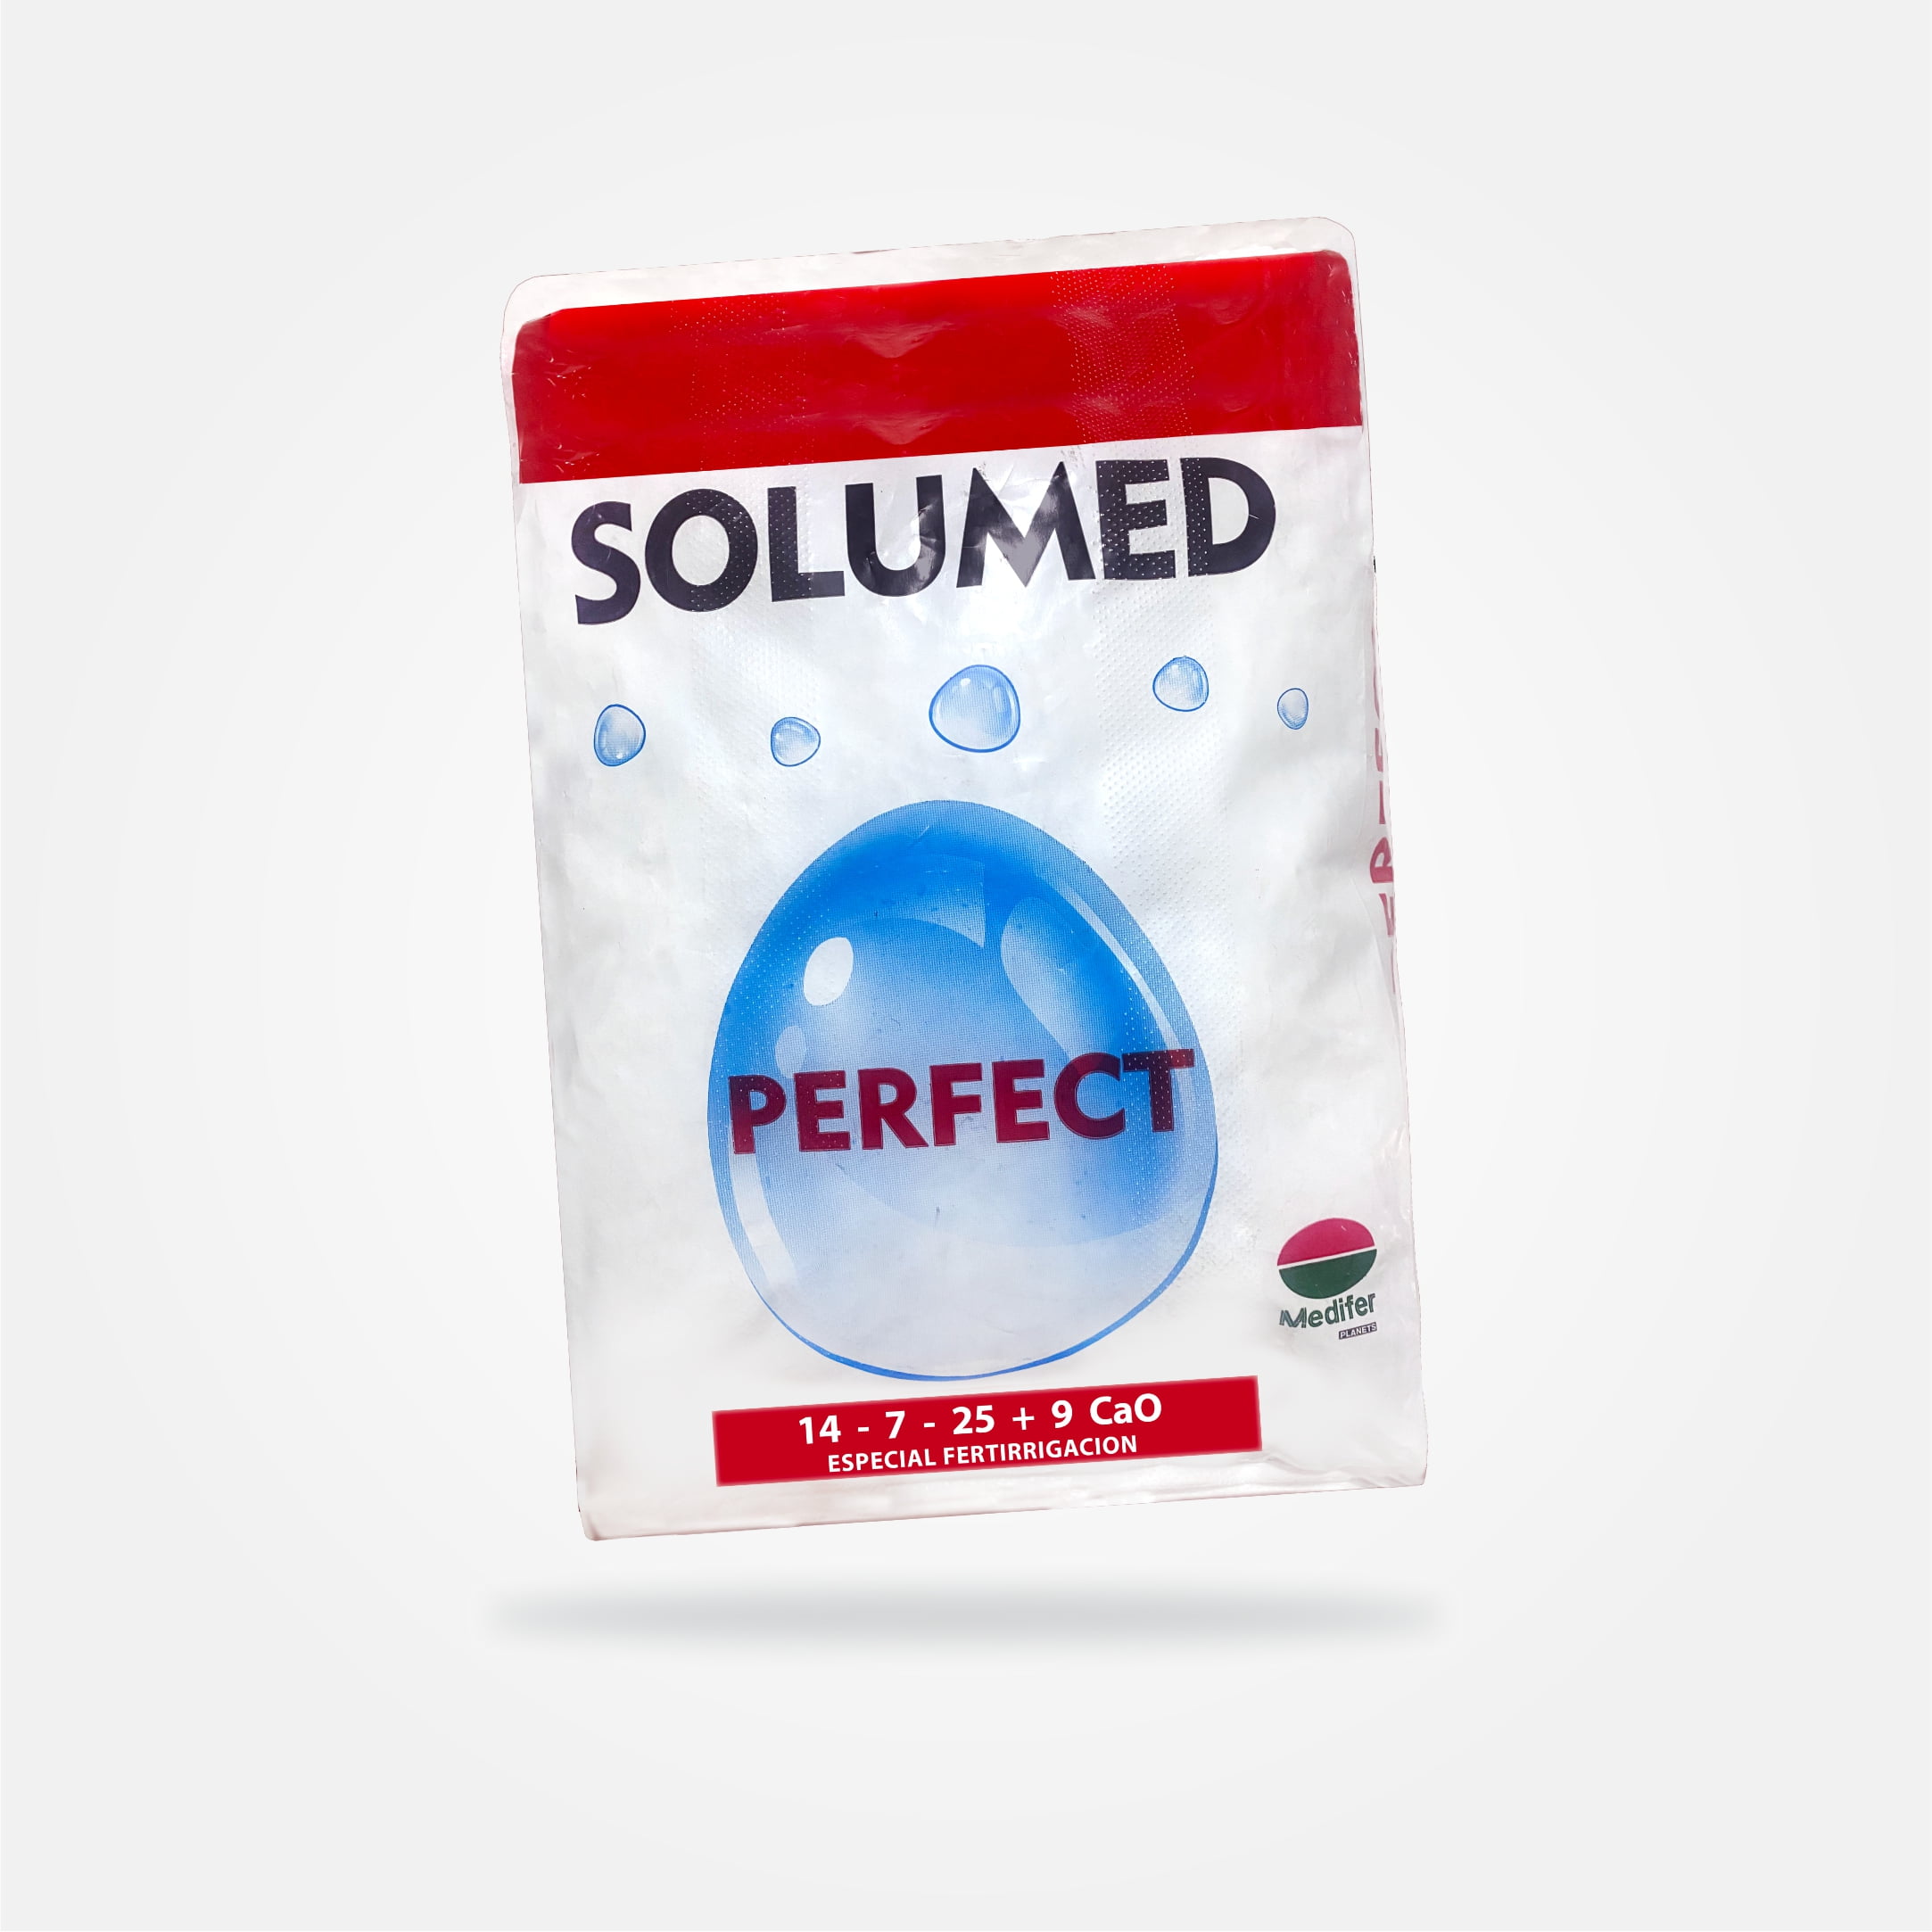 Solumed Perfect 1 - محصولات کمپانی مدیفر